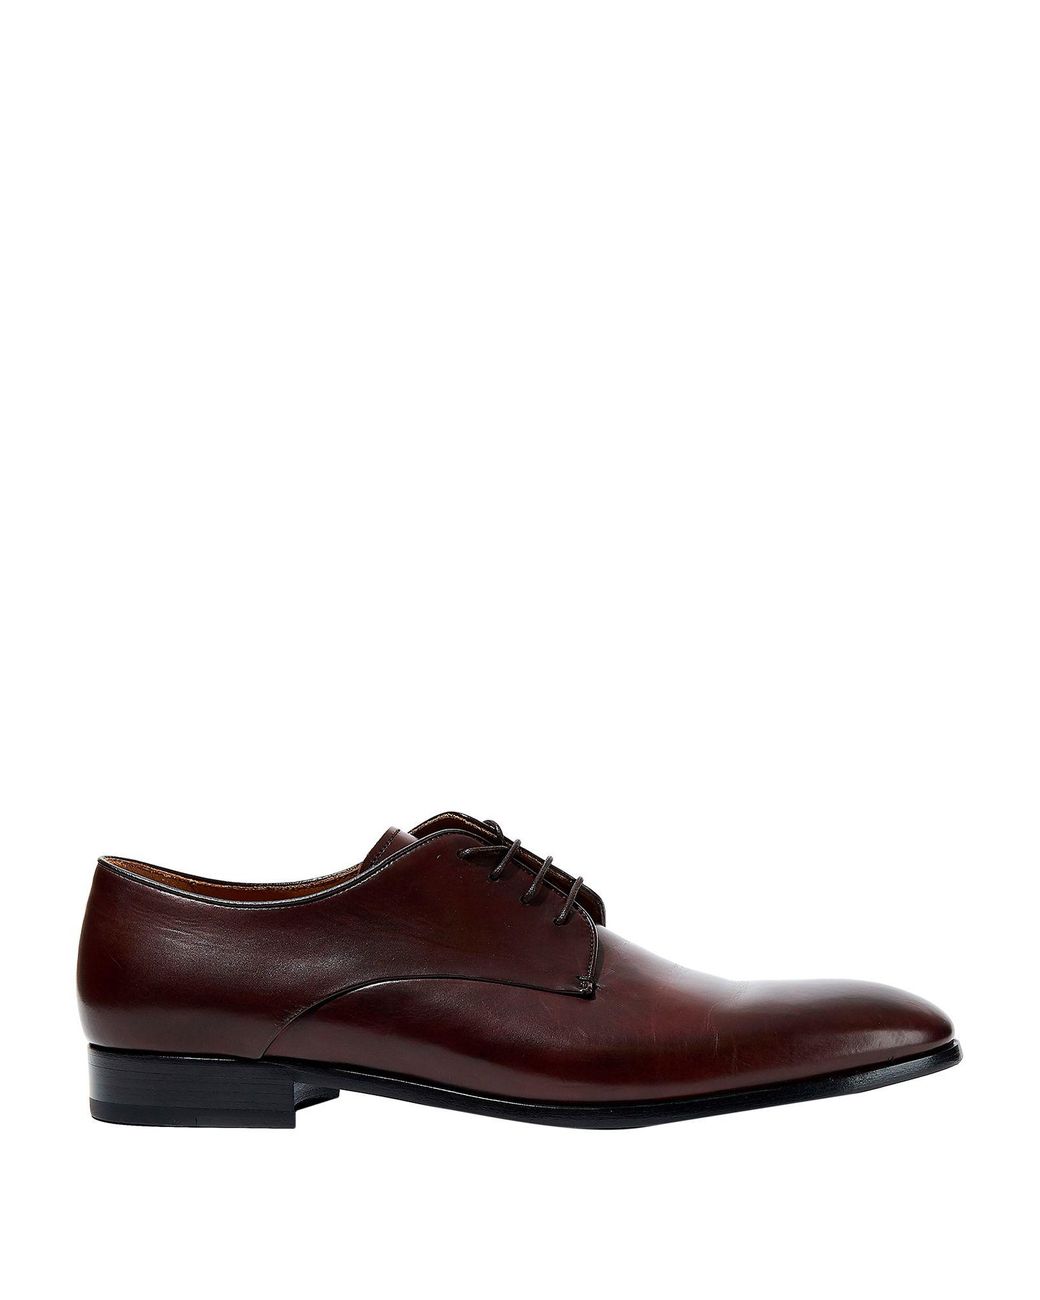 Giorgio Armani Leather Lace-up Shoe in Dark Brown (Brown) for Men ...